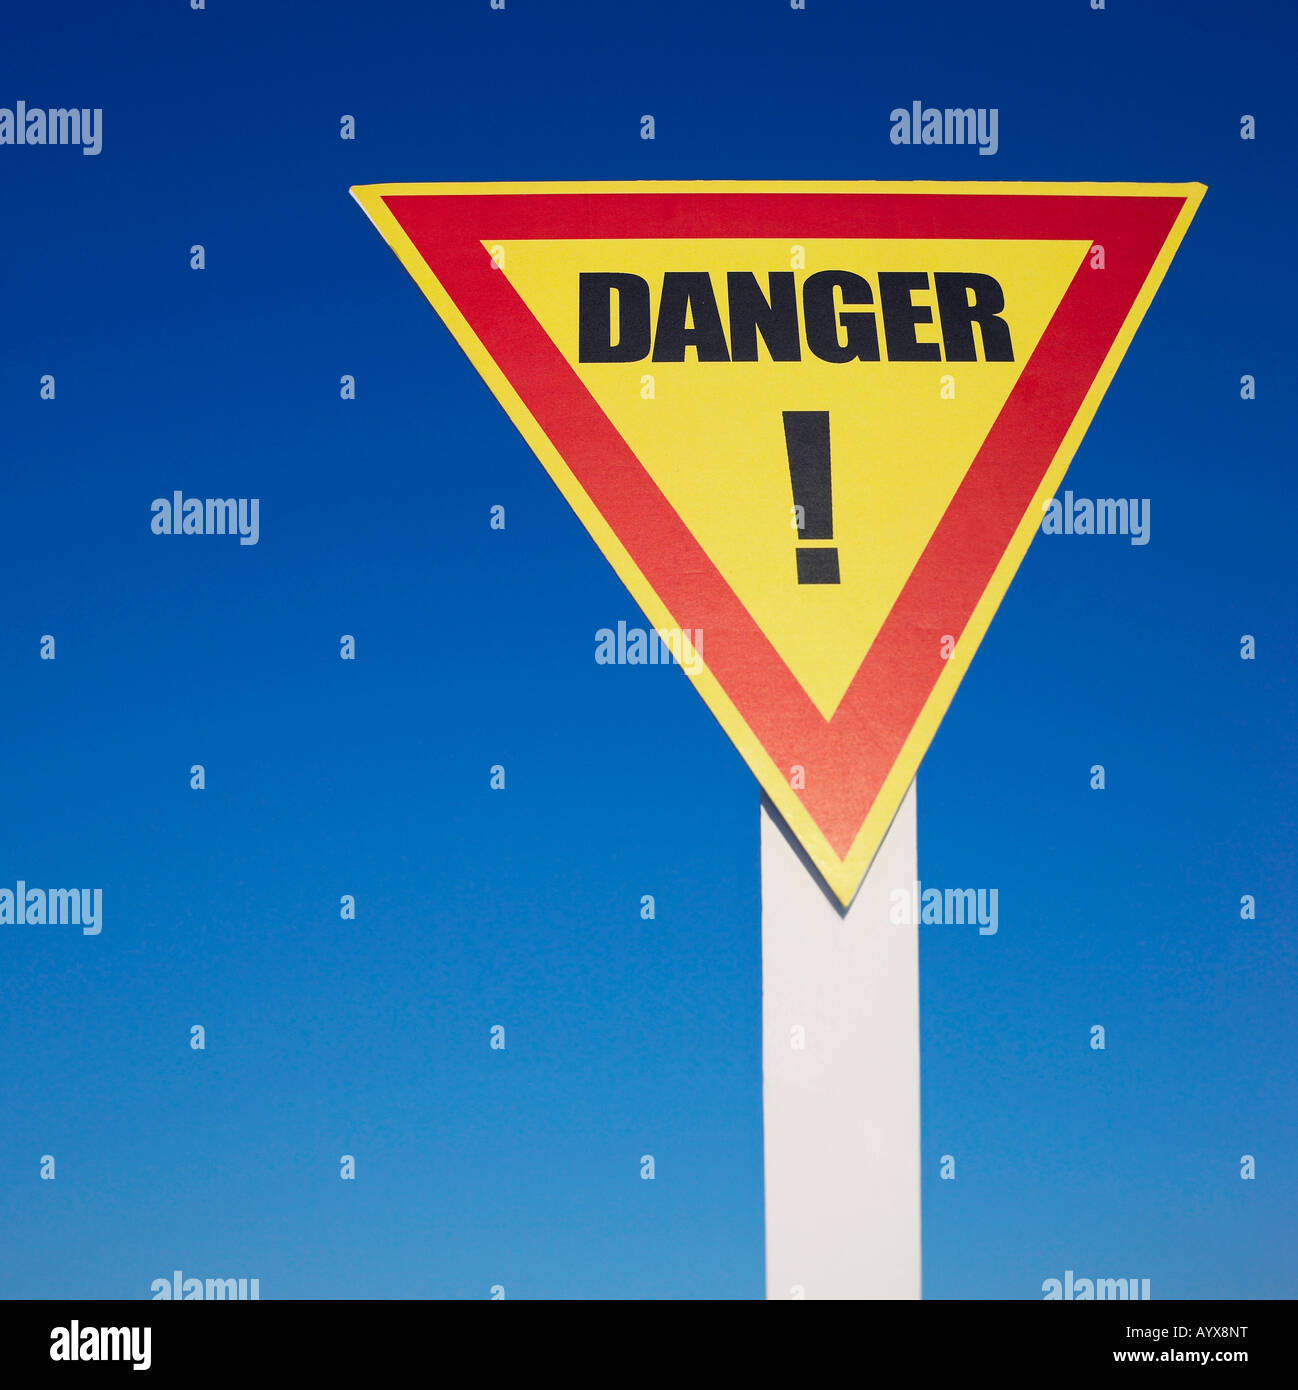 sign alarming danger in the sky Stock Photo